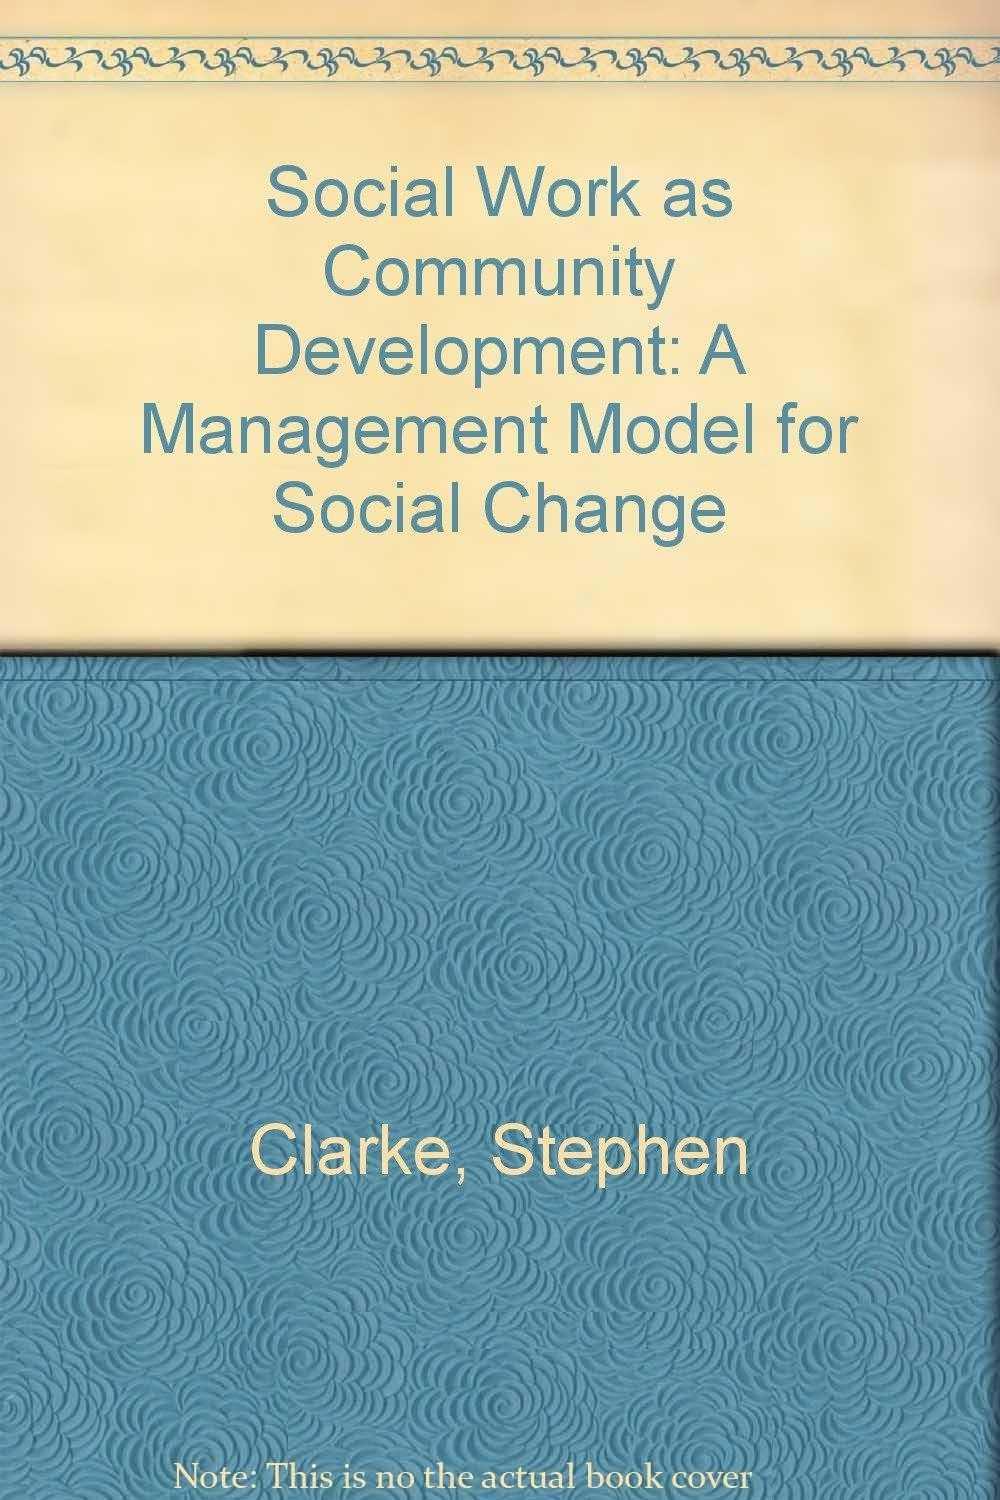 Social Work as Community Development: A Management Model for Social Change by. - Clarke, Stephen